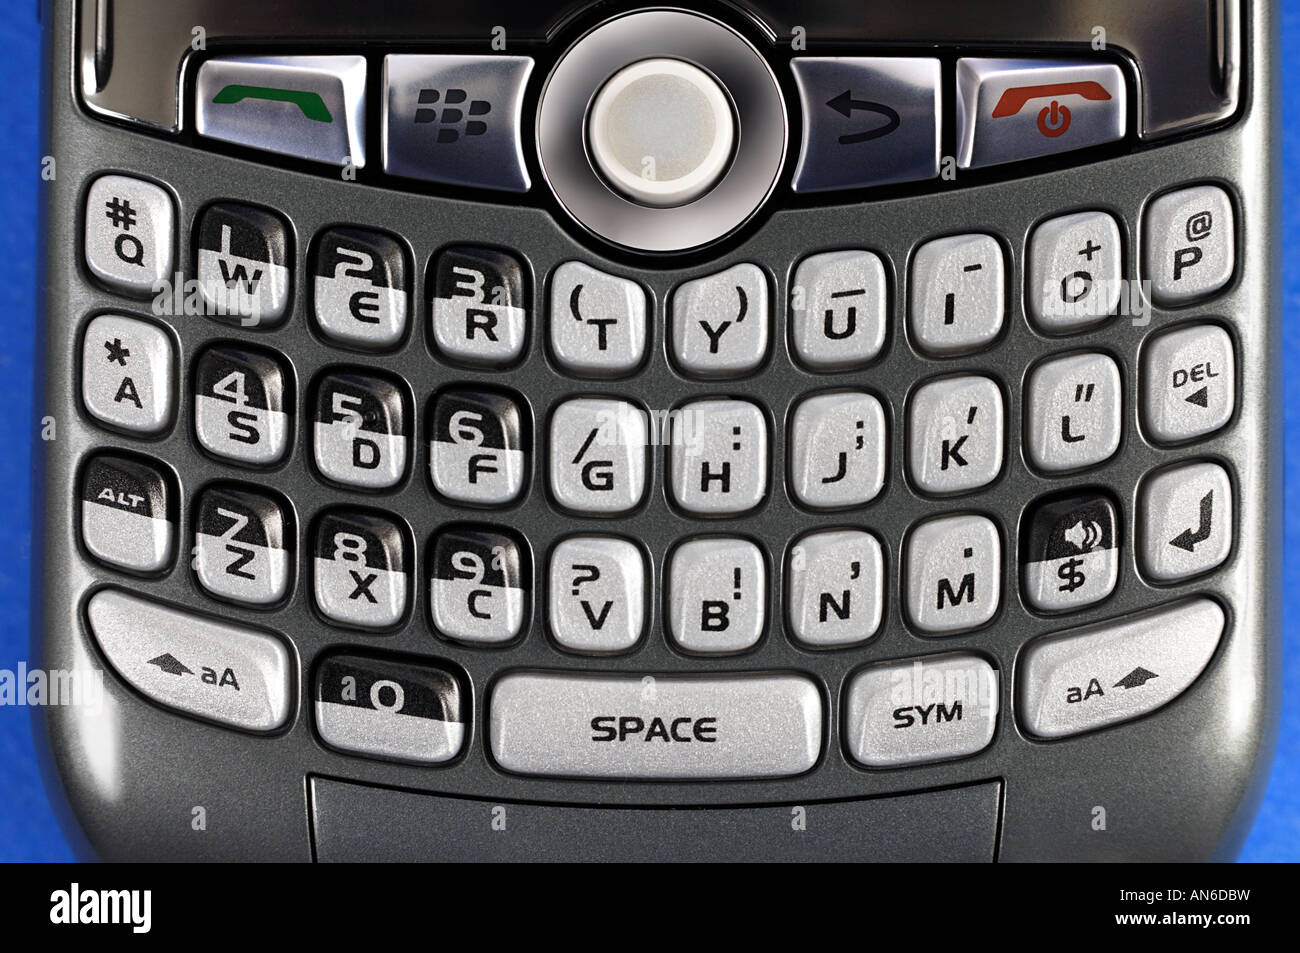 BlackBerry 8310 Curve Smartphone keyboard close up Stock Photo